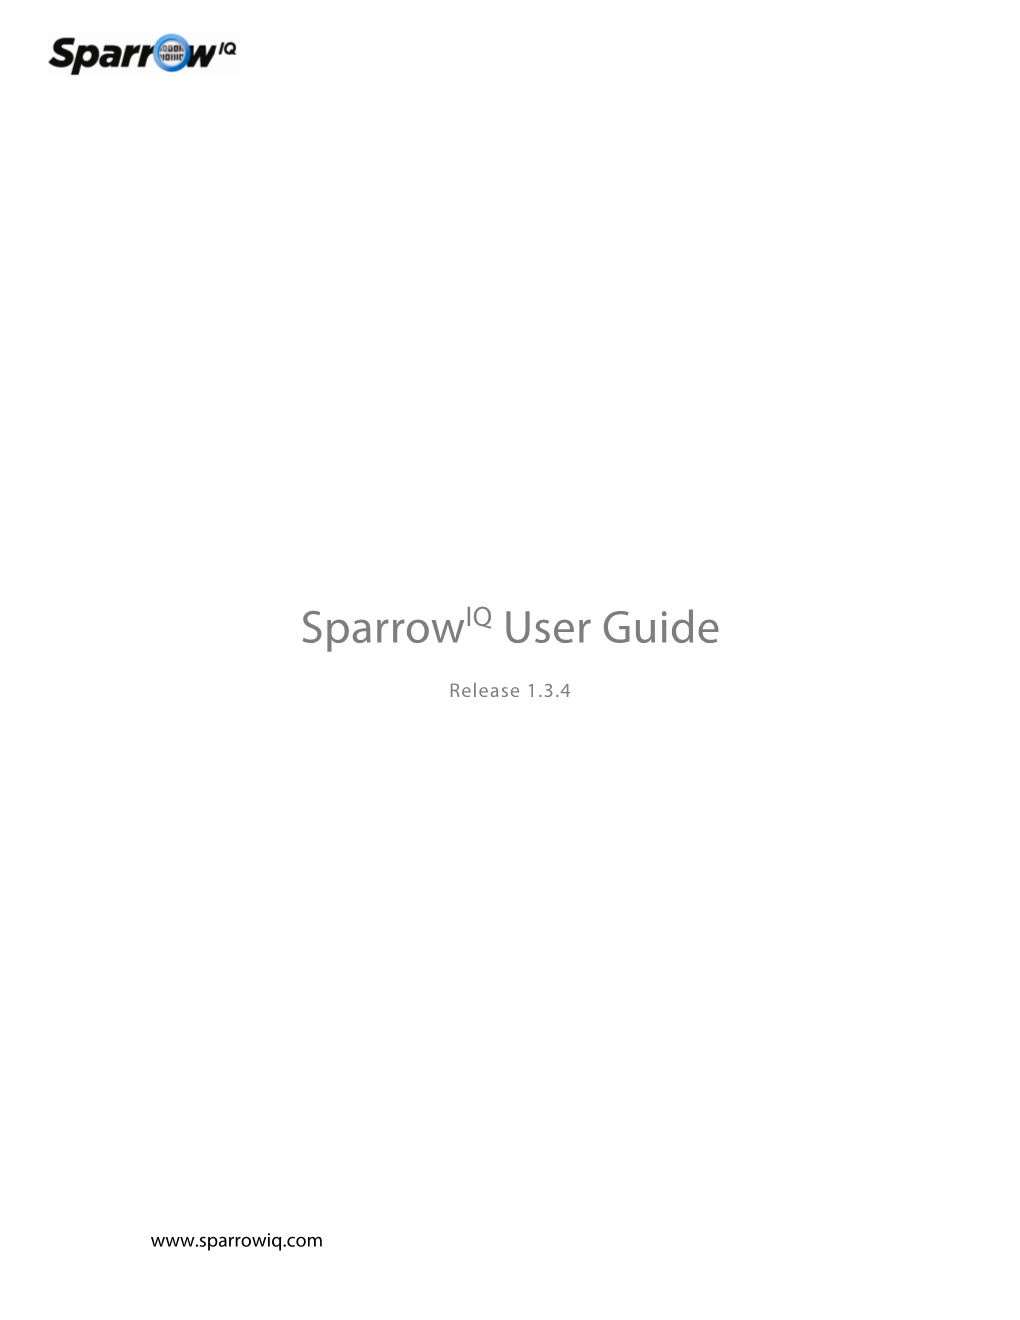 Sparrow IQ Manual (Pdf)